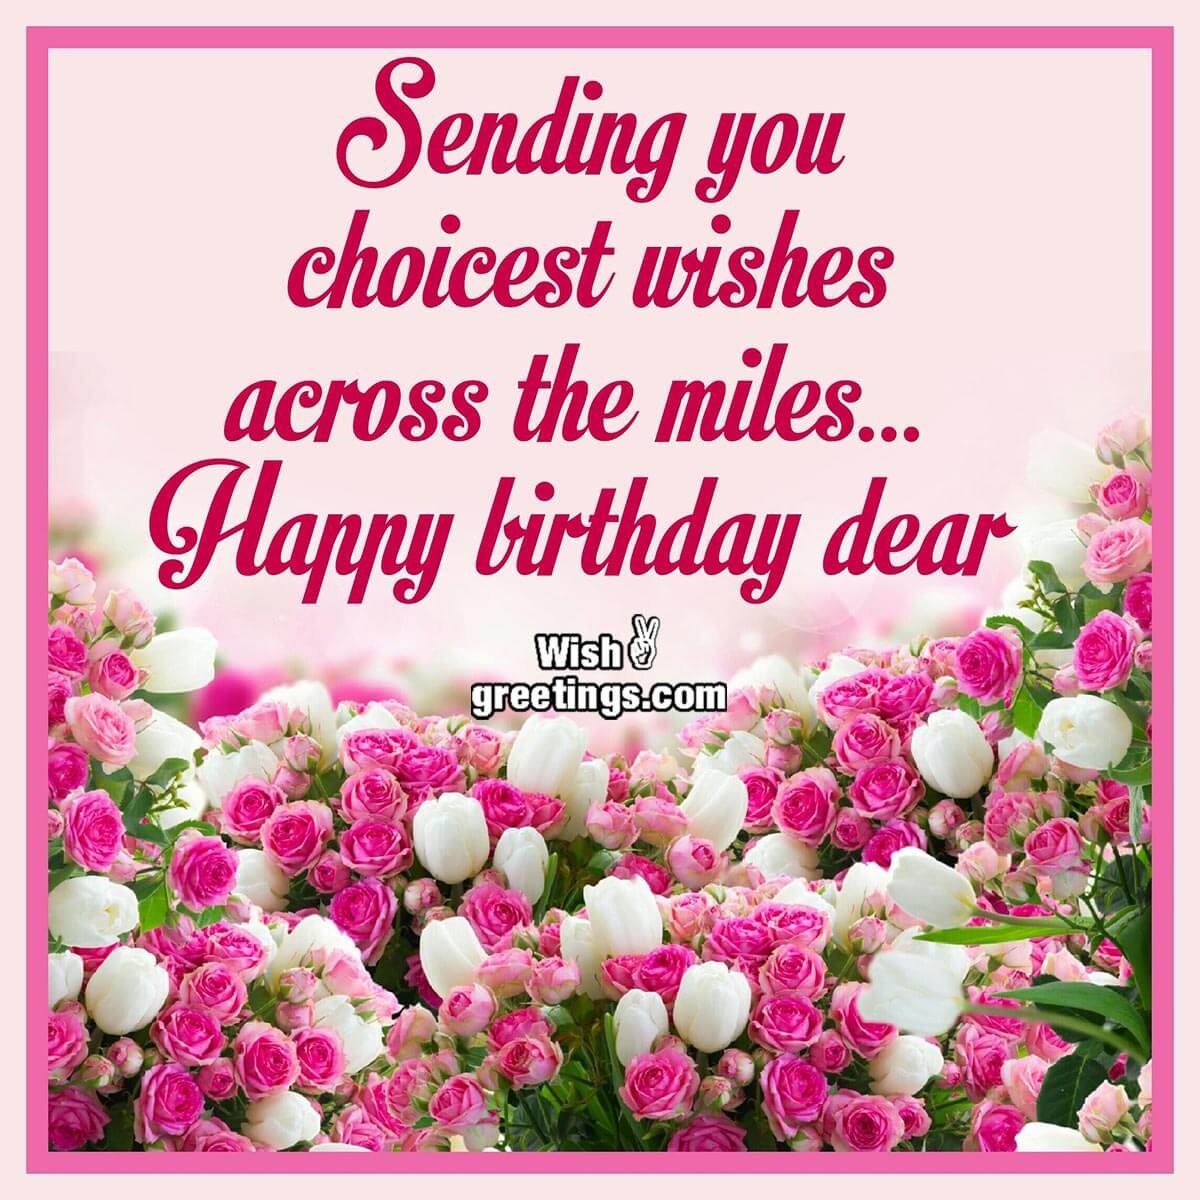 Happy Birthday Dear – Sending You Choicest Wishes